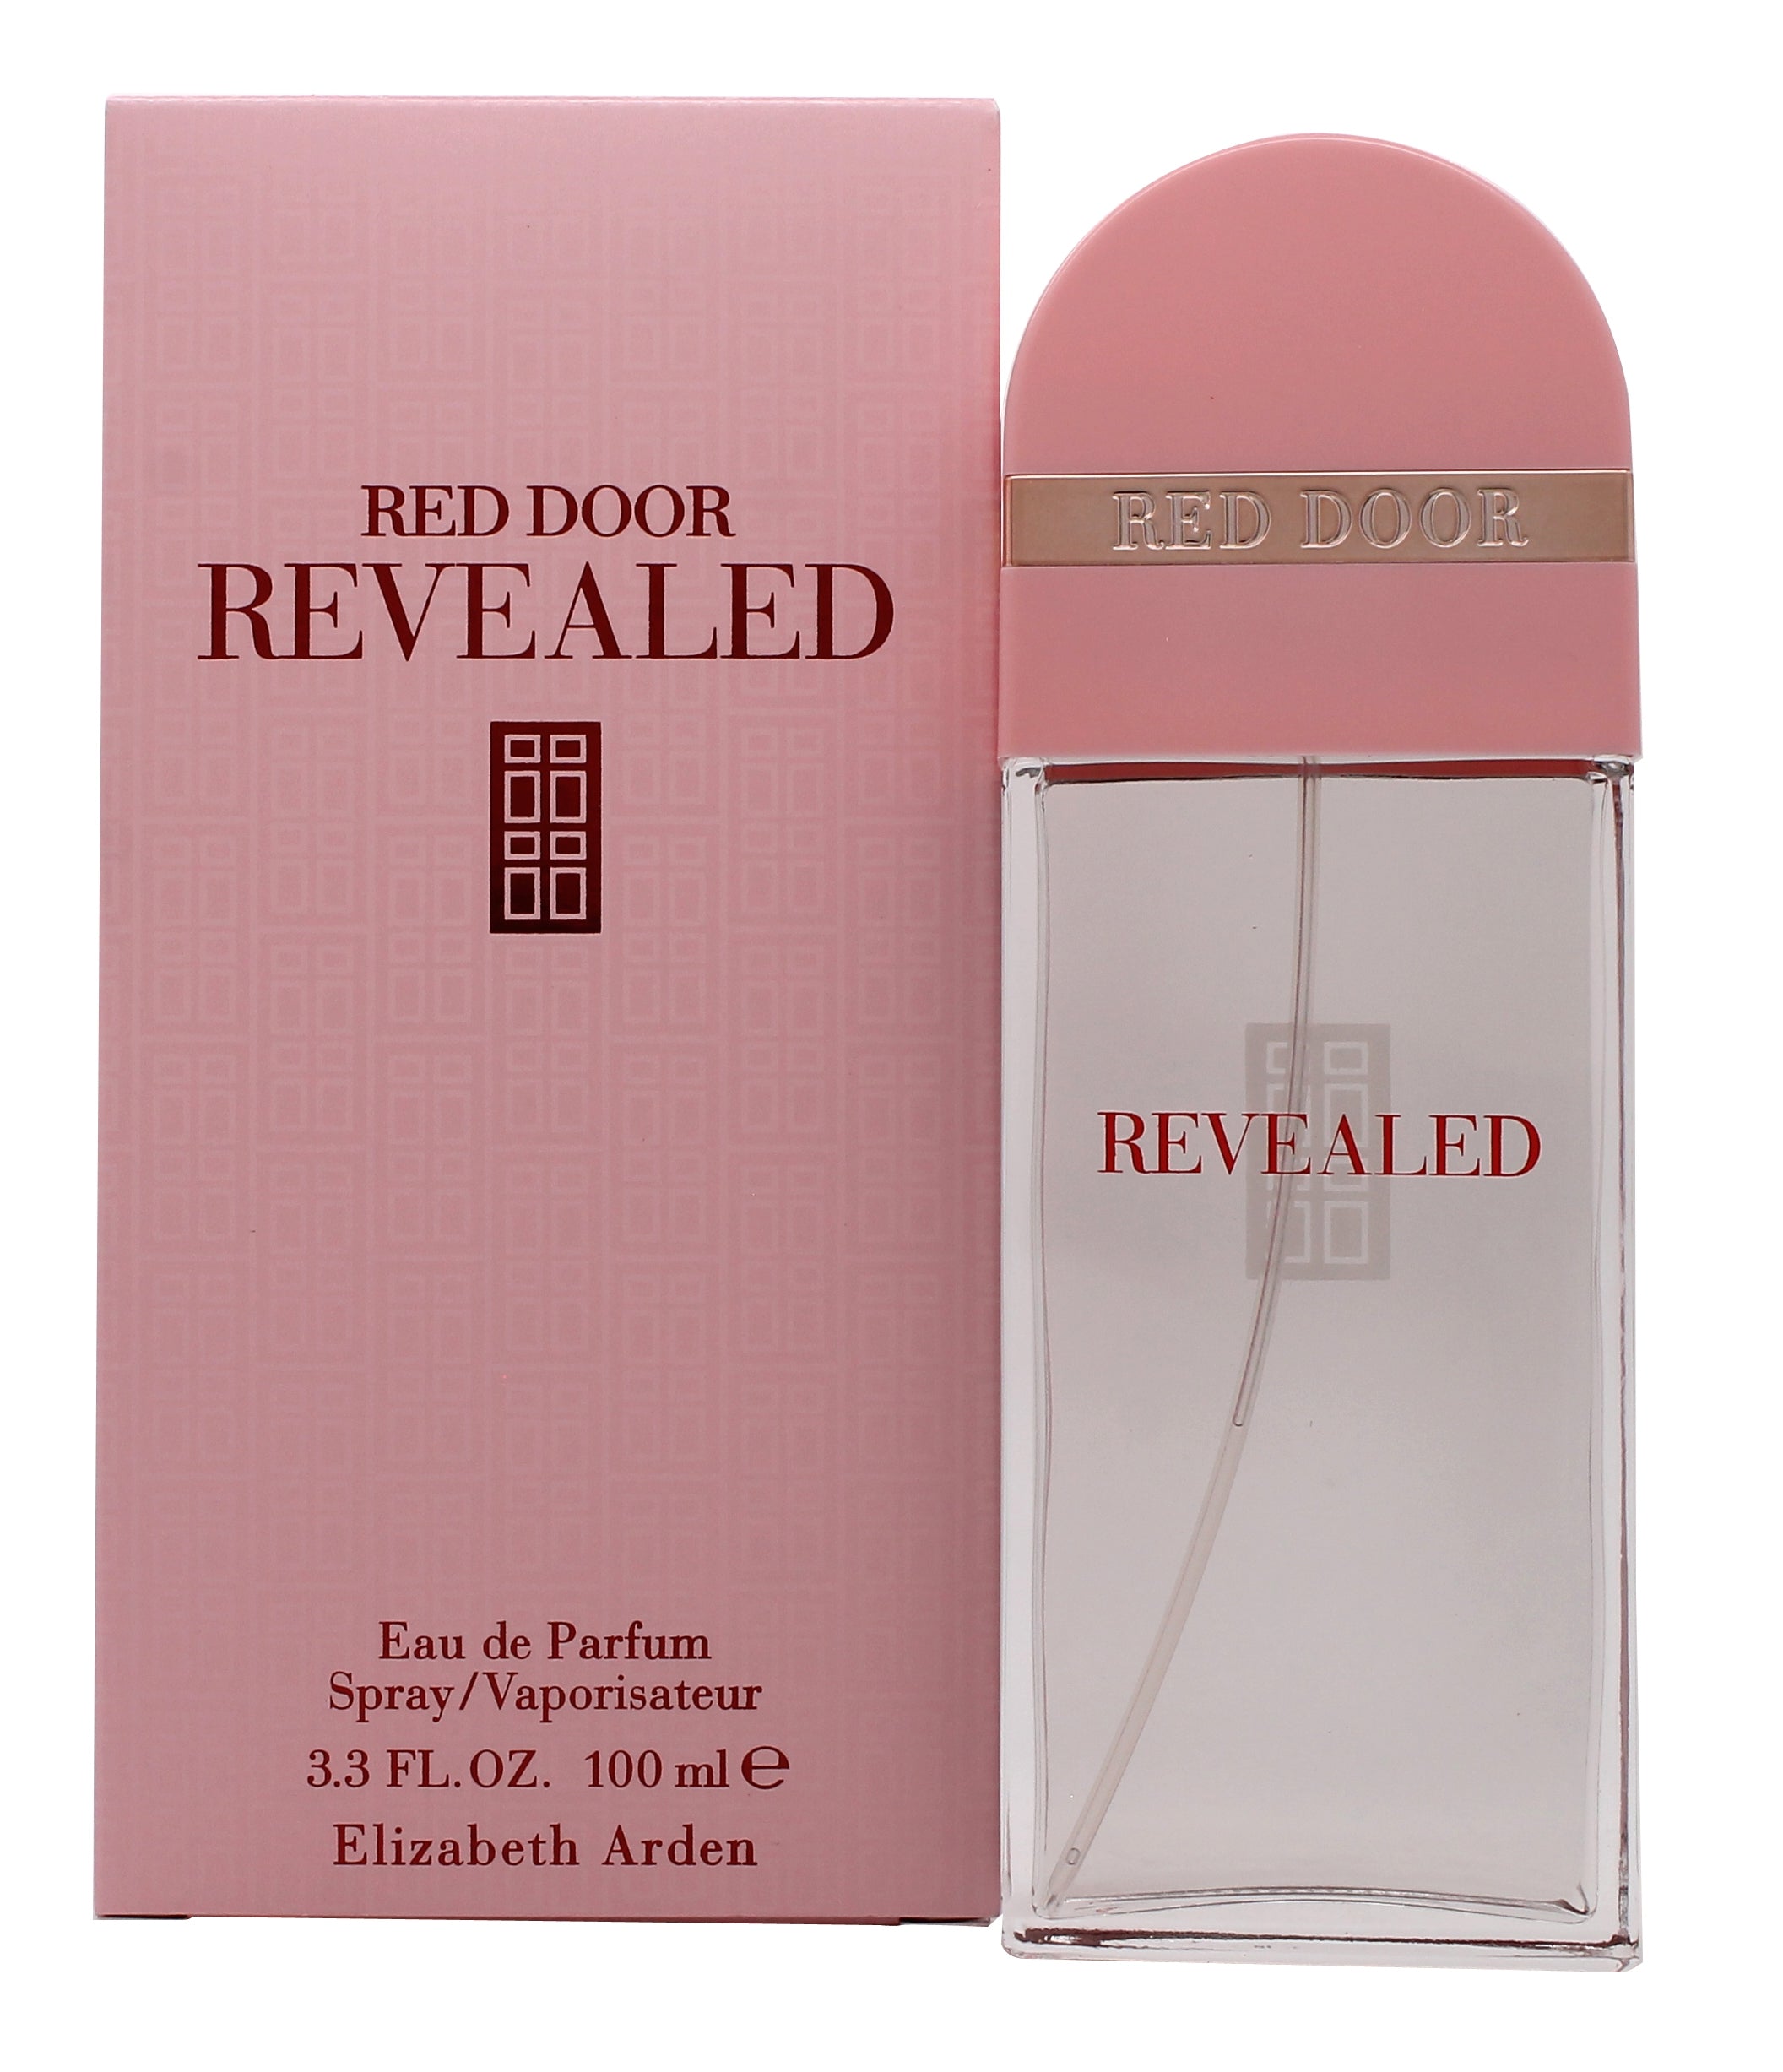 View Elizabeth Arden Red Door Revealed Eau de Parfum 100ml Spray information